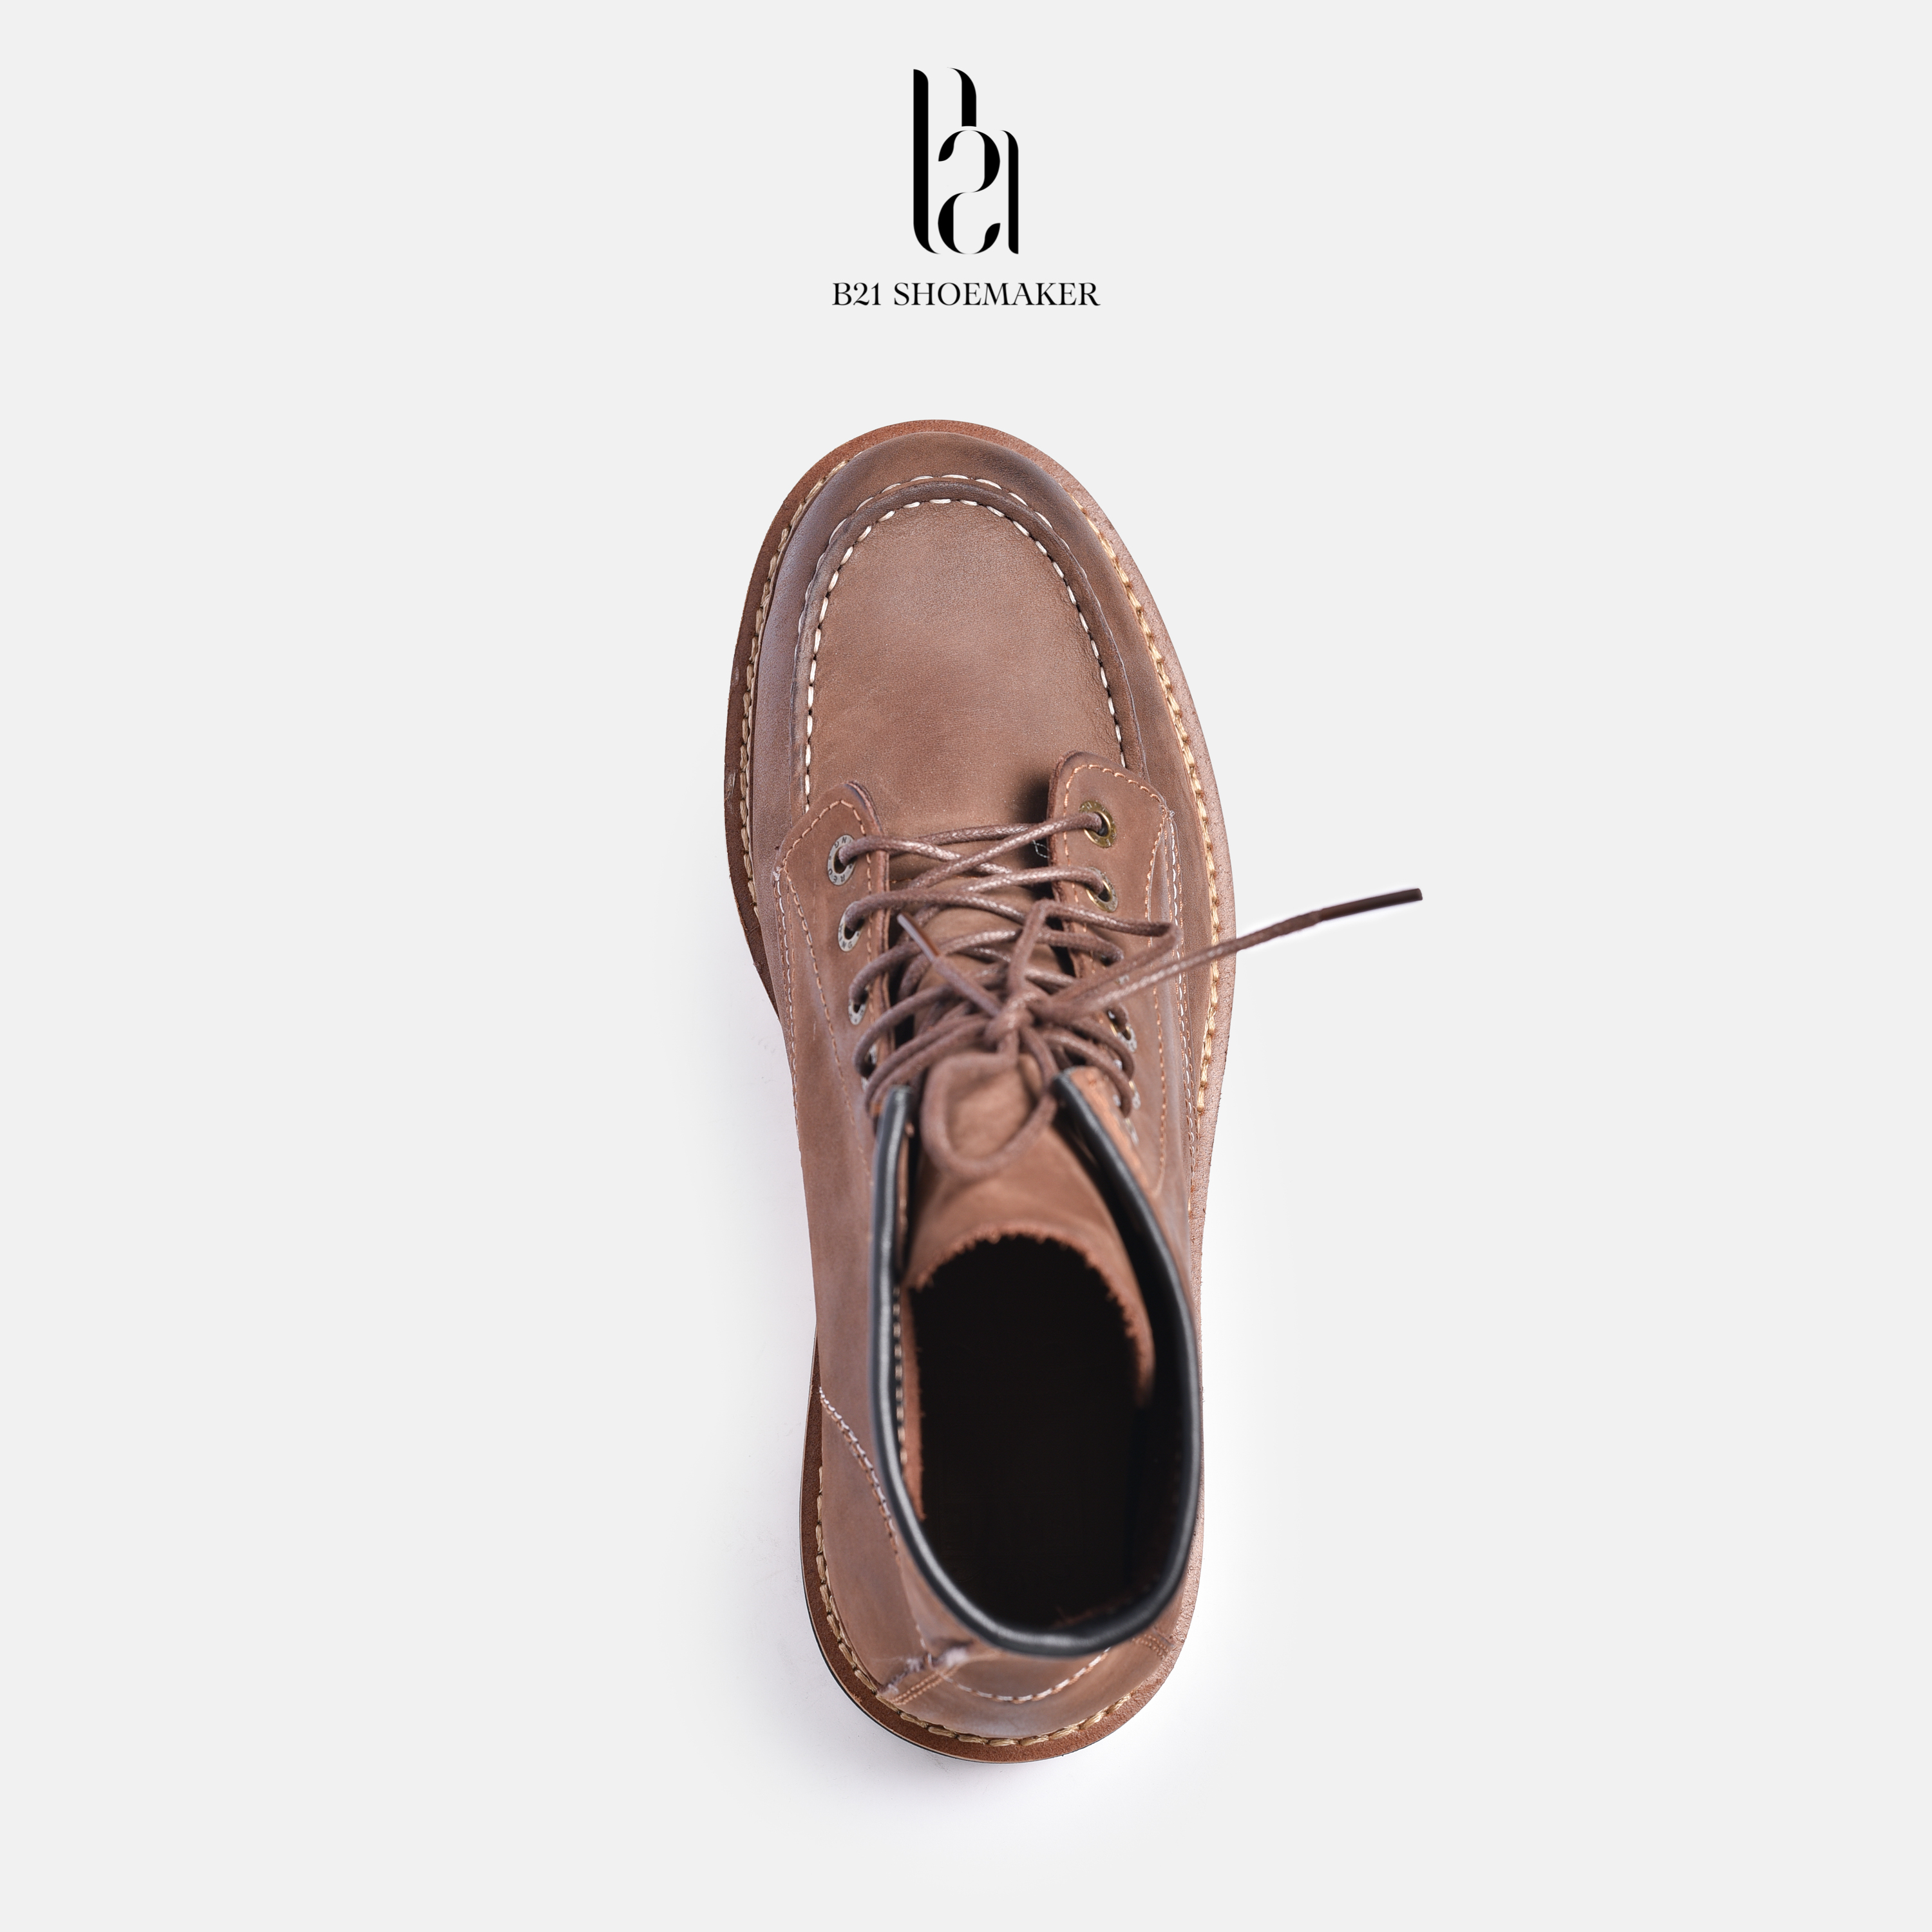 Giày Da Nam Cổ Cao MOCTOE Classic 1907 DEREST BOOT Lót Giày Tăng Chiều Cao 3 cm Phong Cách CLASSIC Retro - B21 Shoemaker